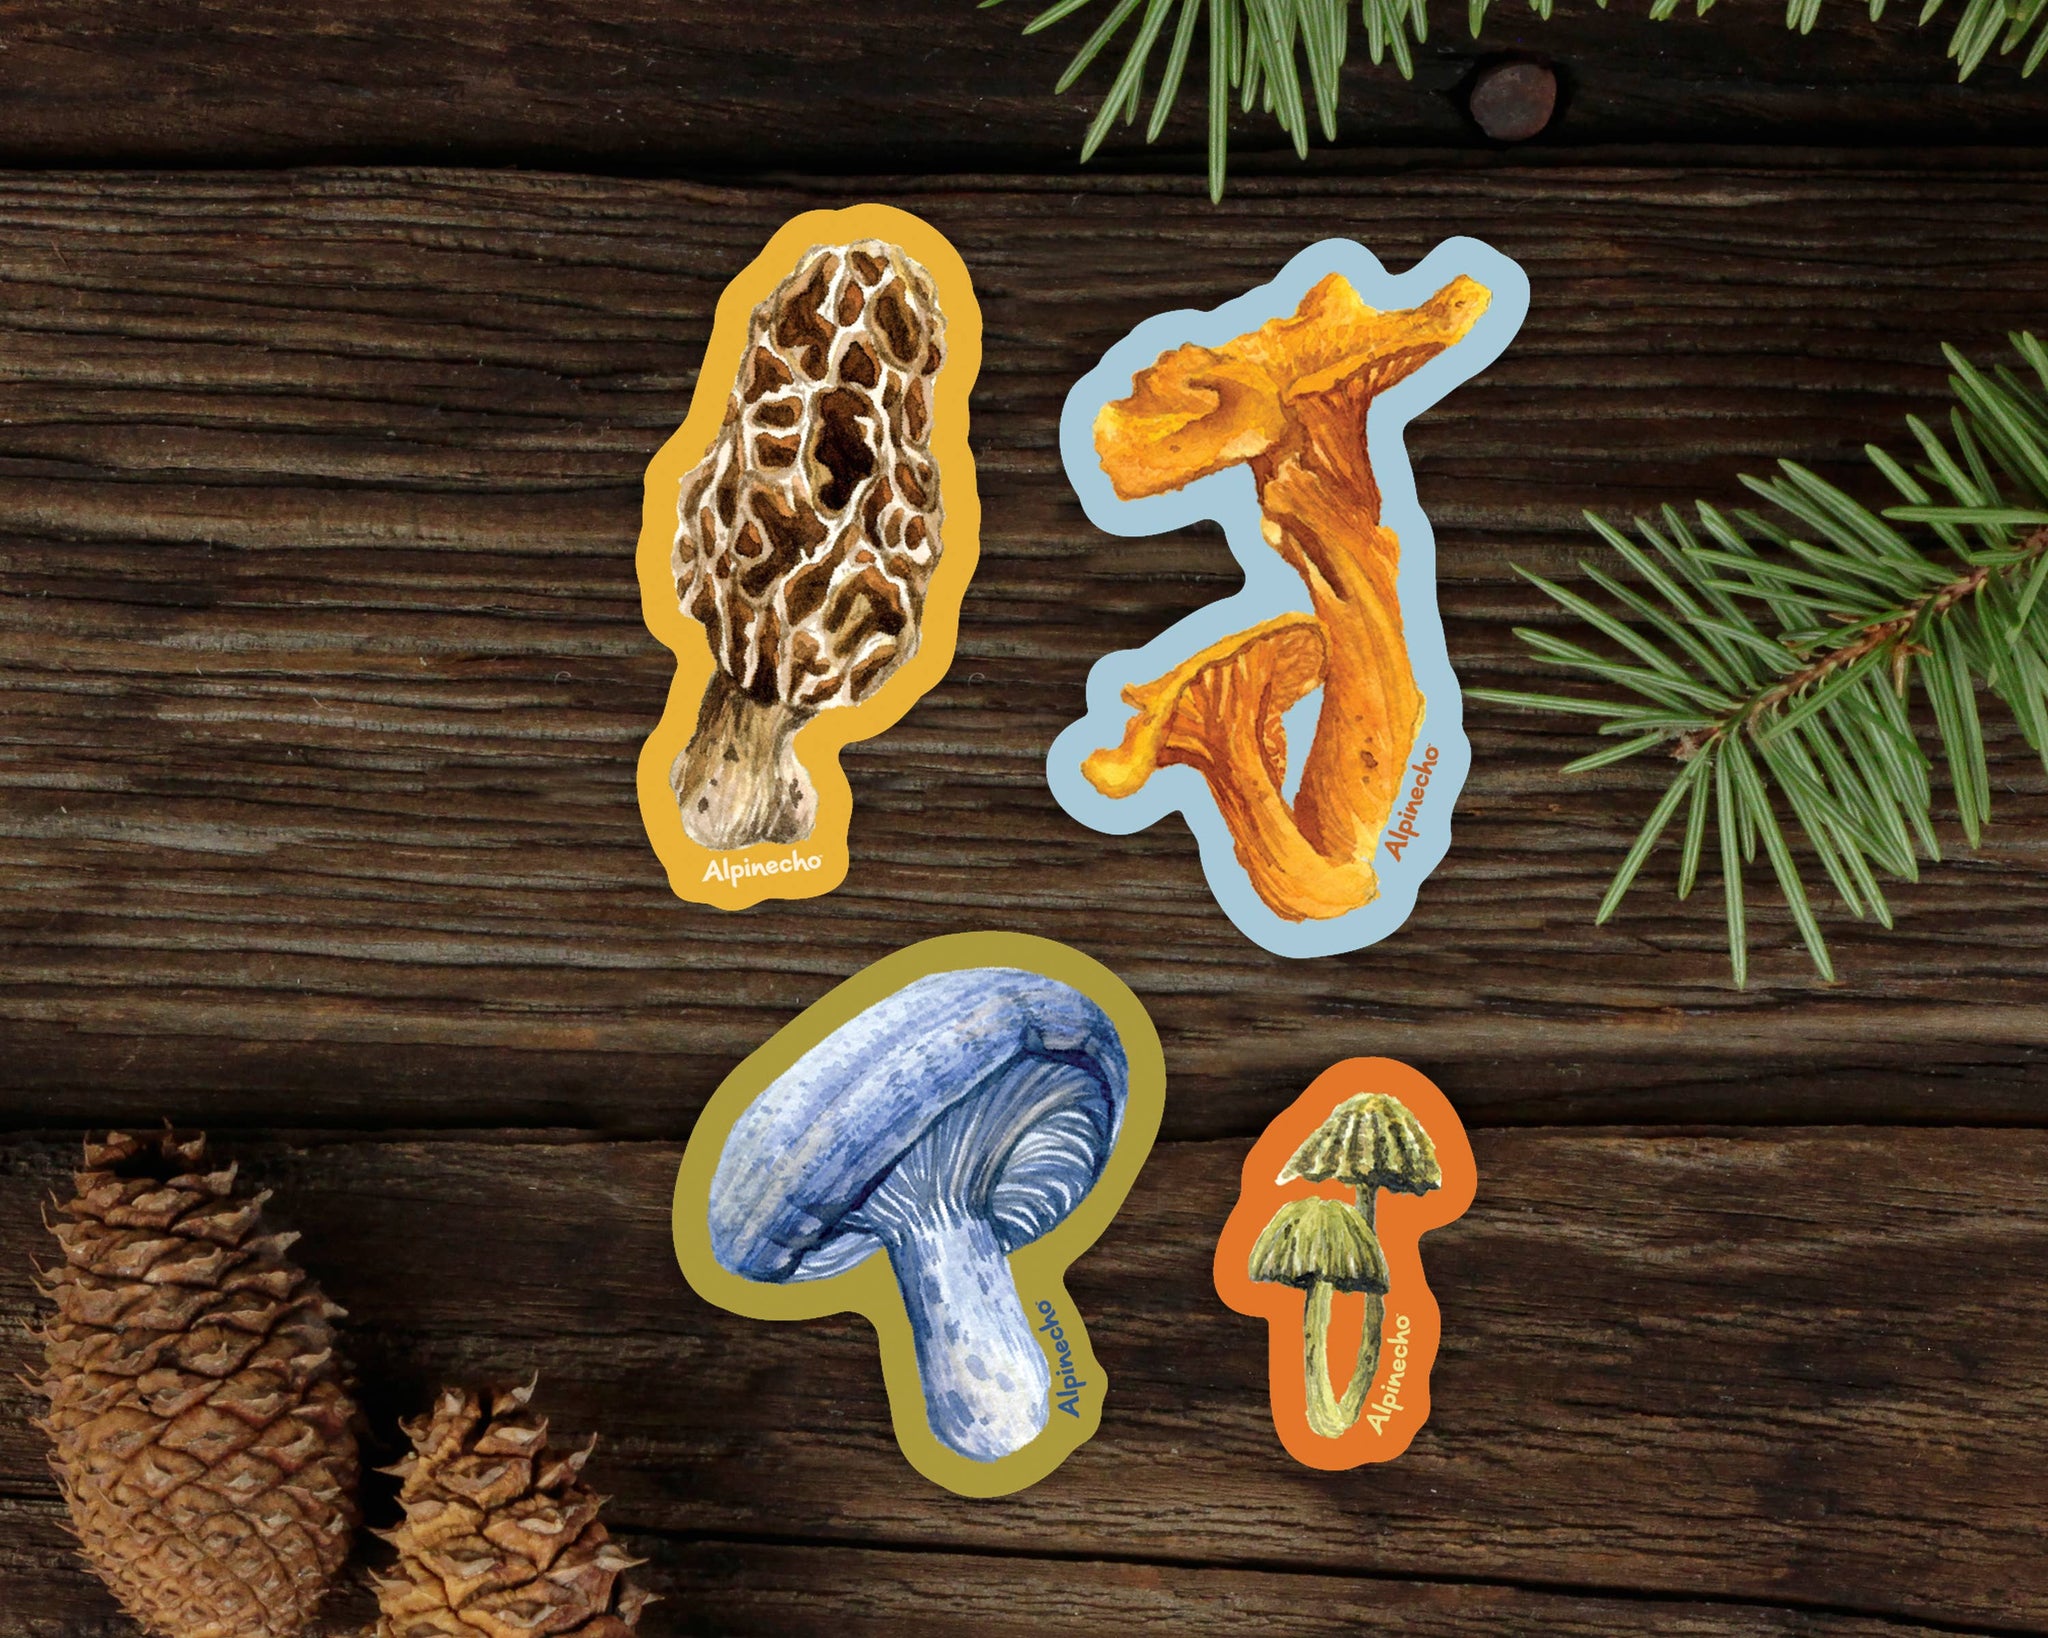 Alpinecho - Mushrooms Sticker